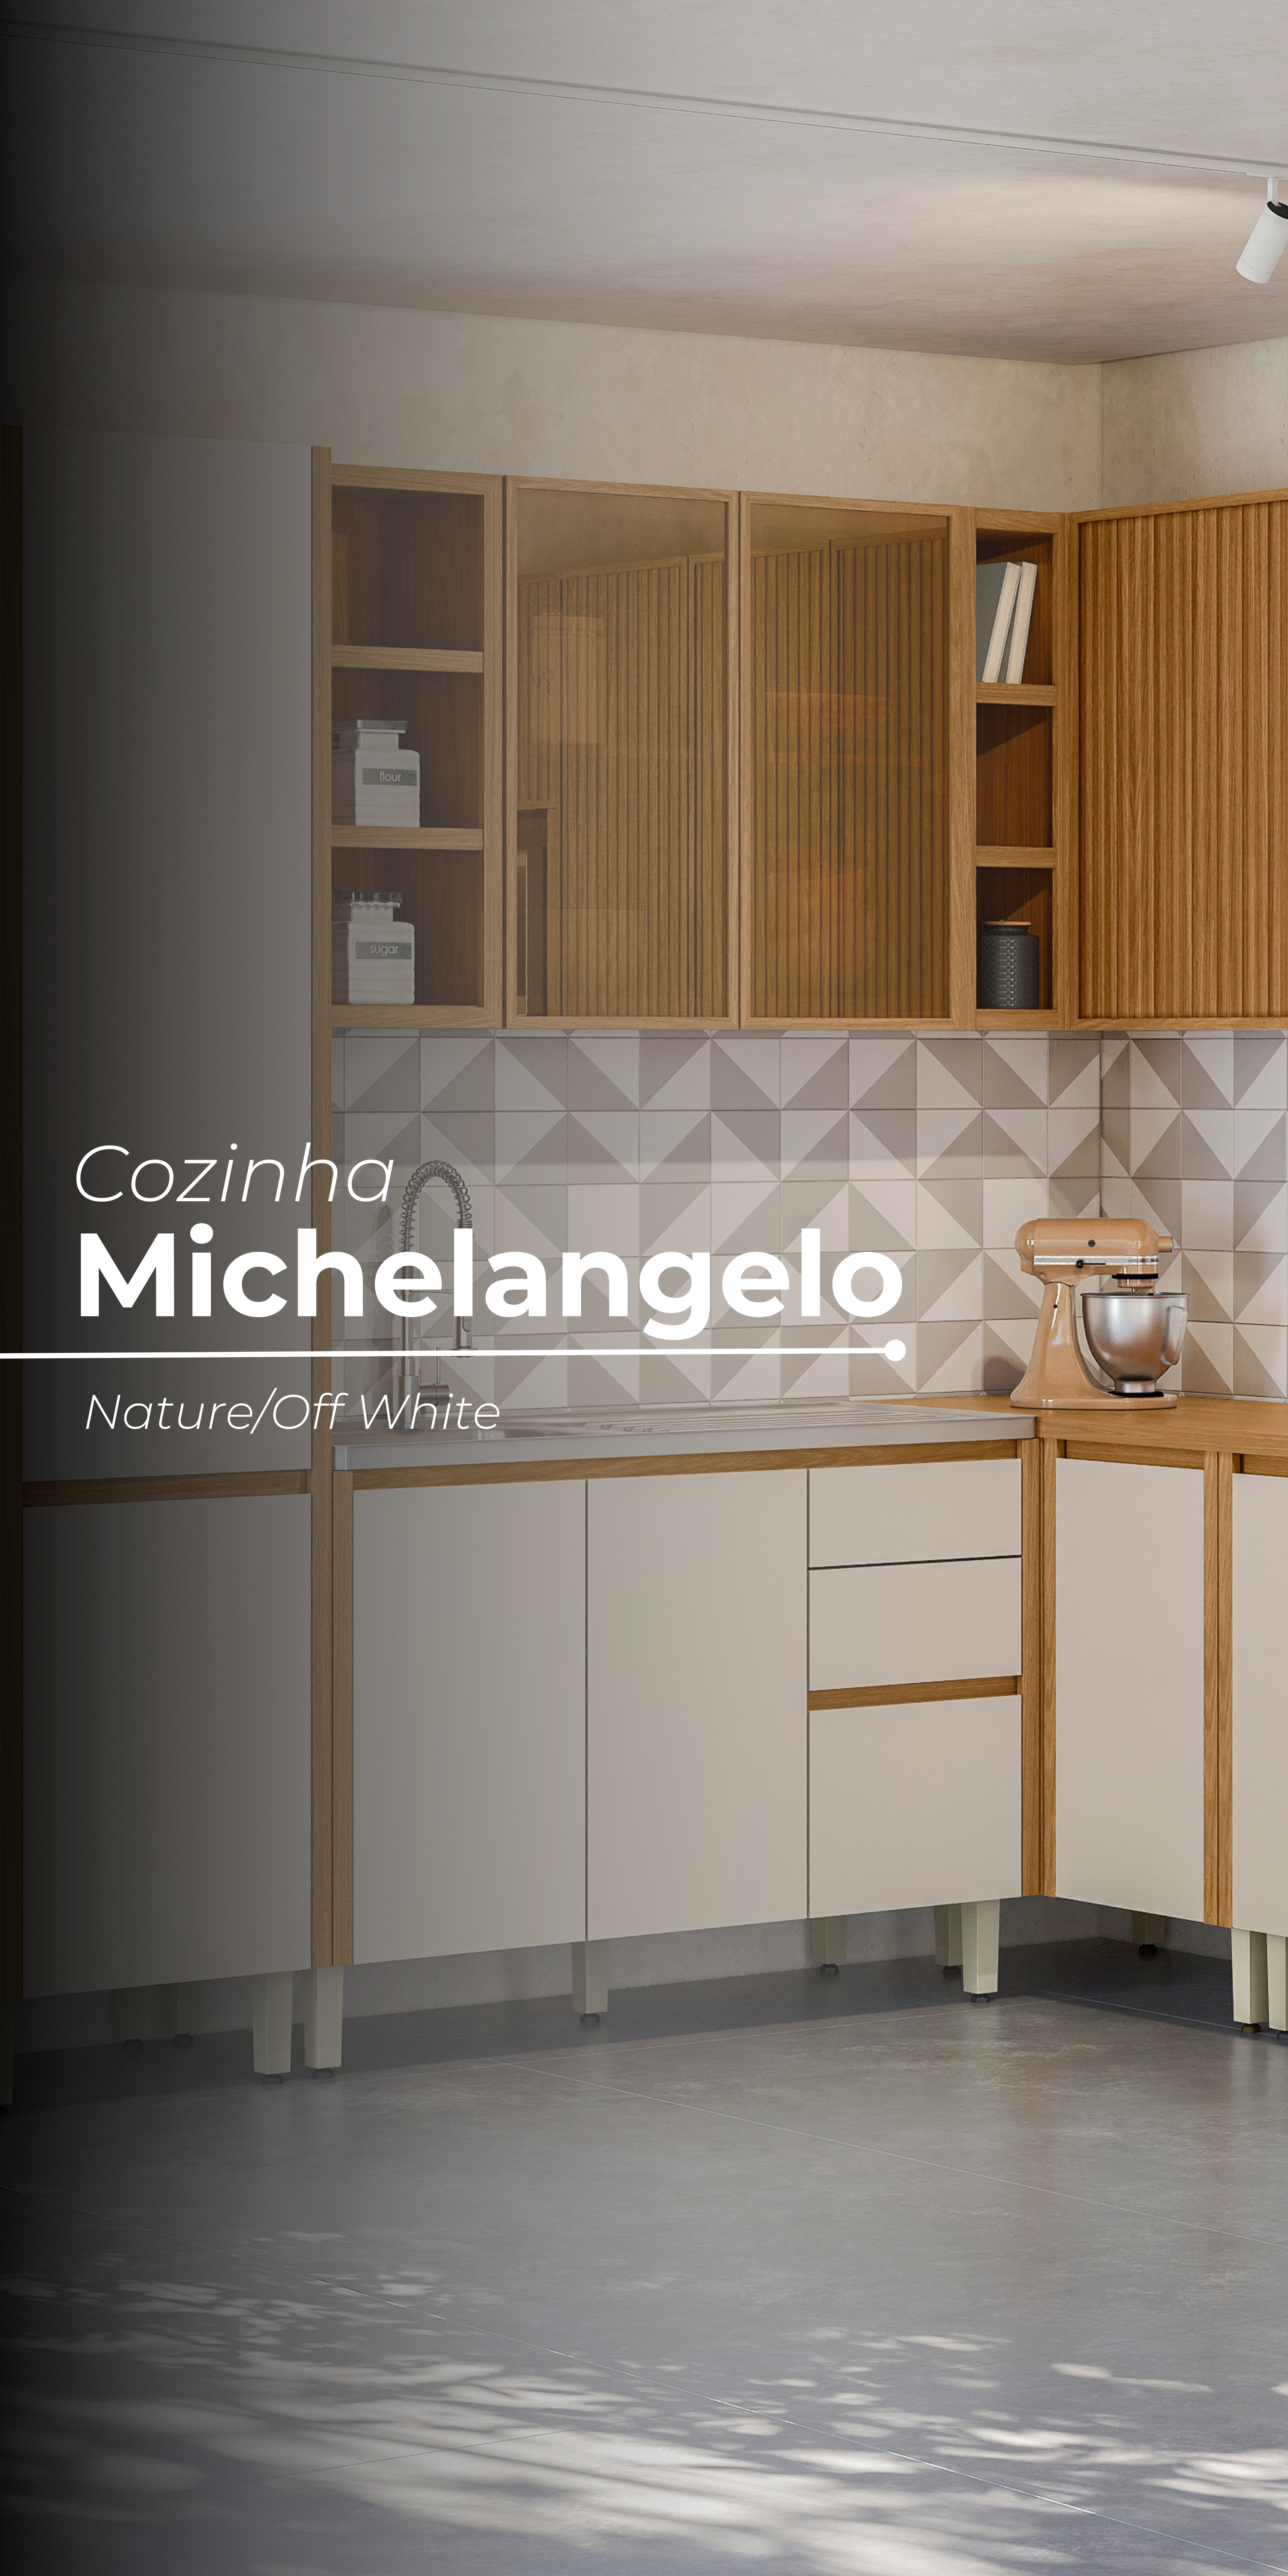 Cozinha Michelangelo